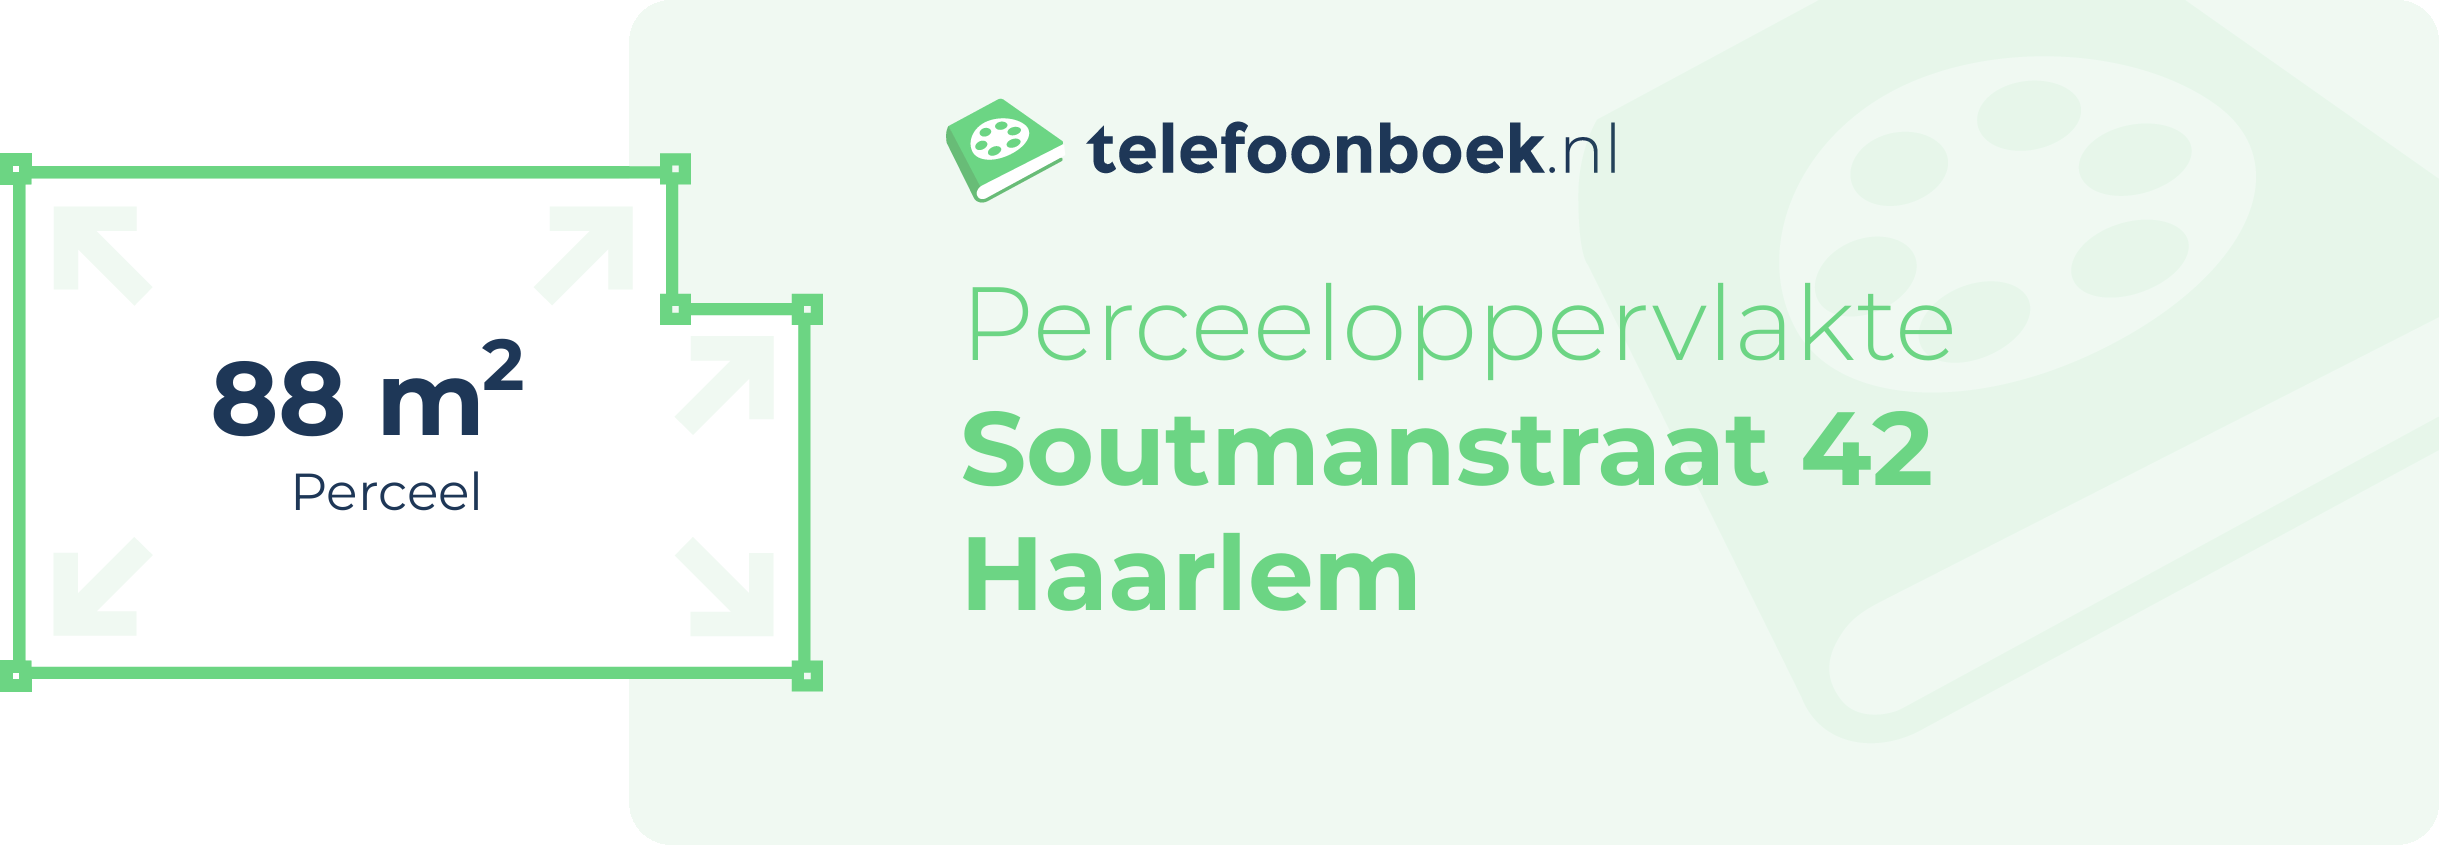 Perceeloppervlakte Soutmanstraat 42 Haarlem